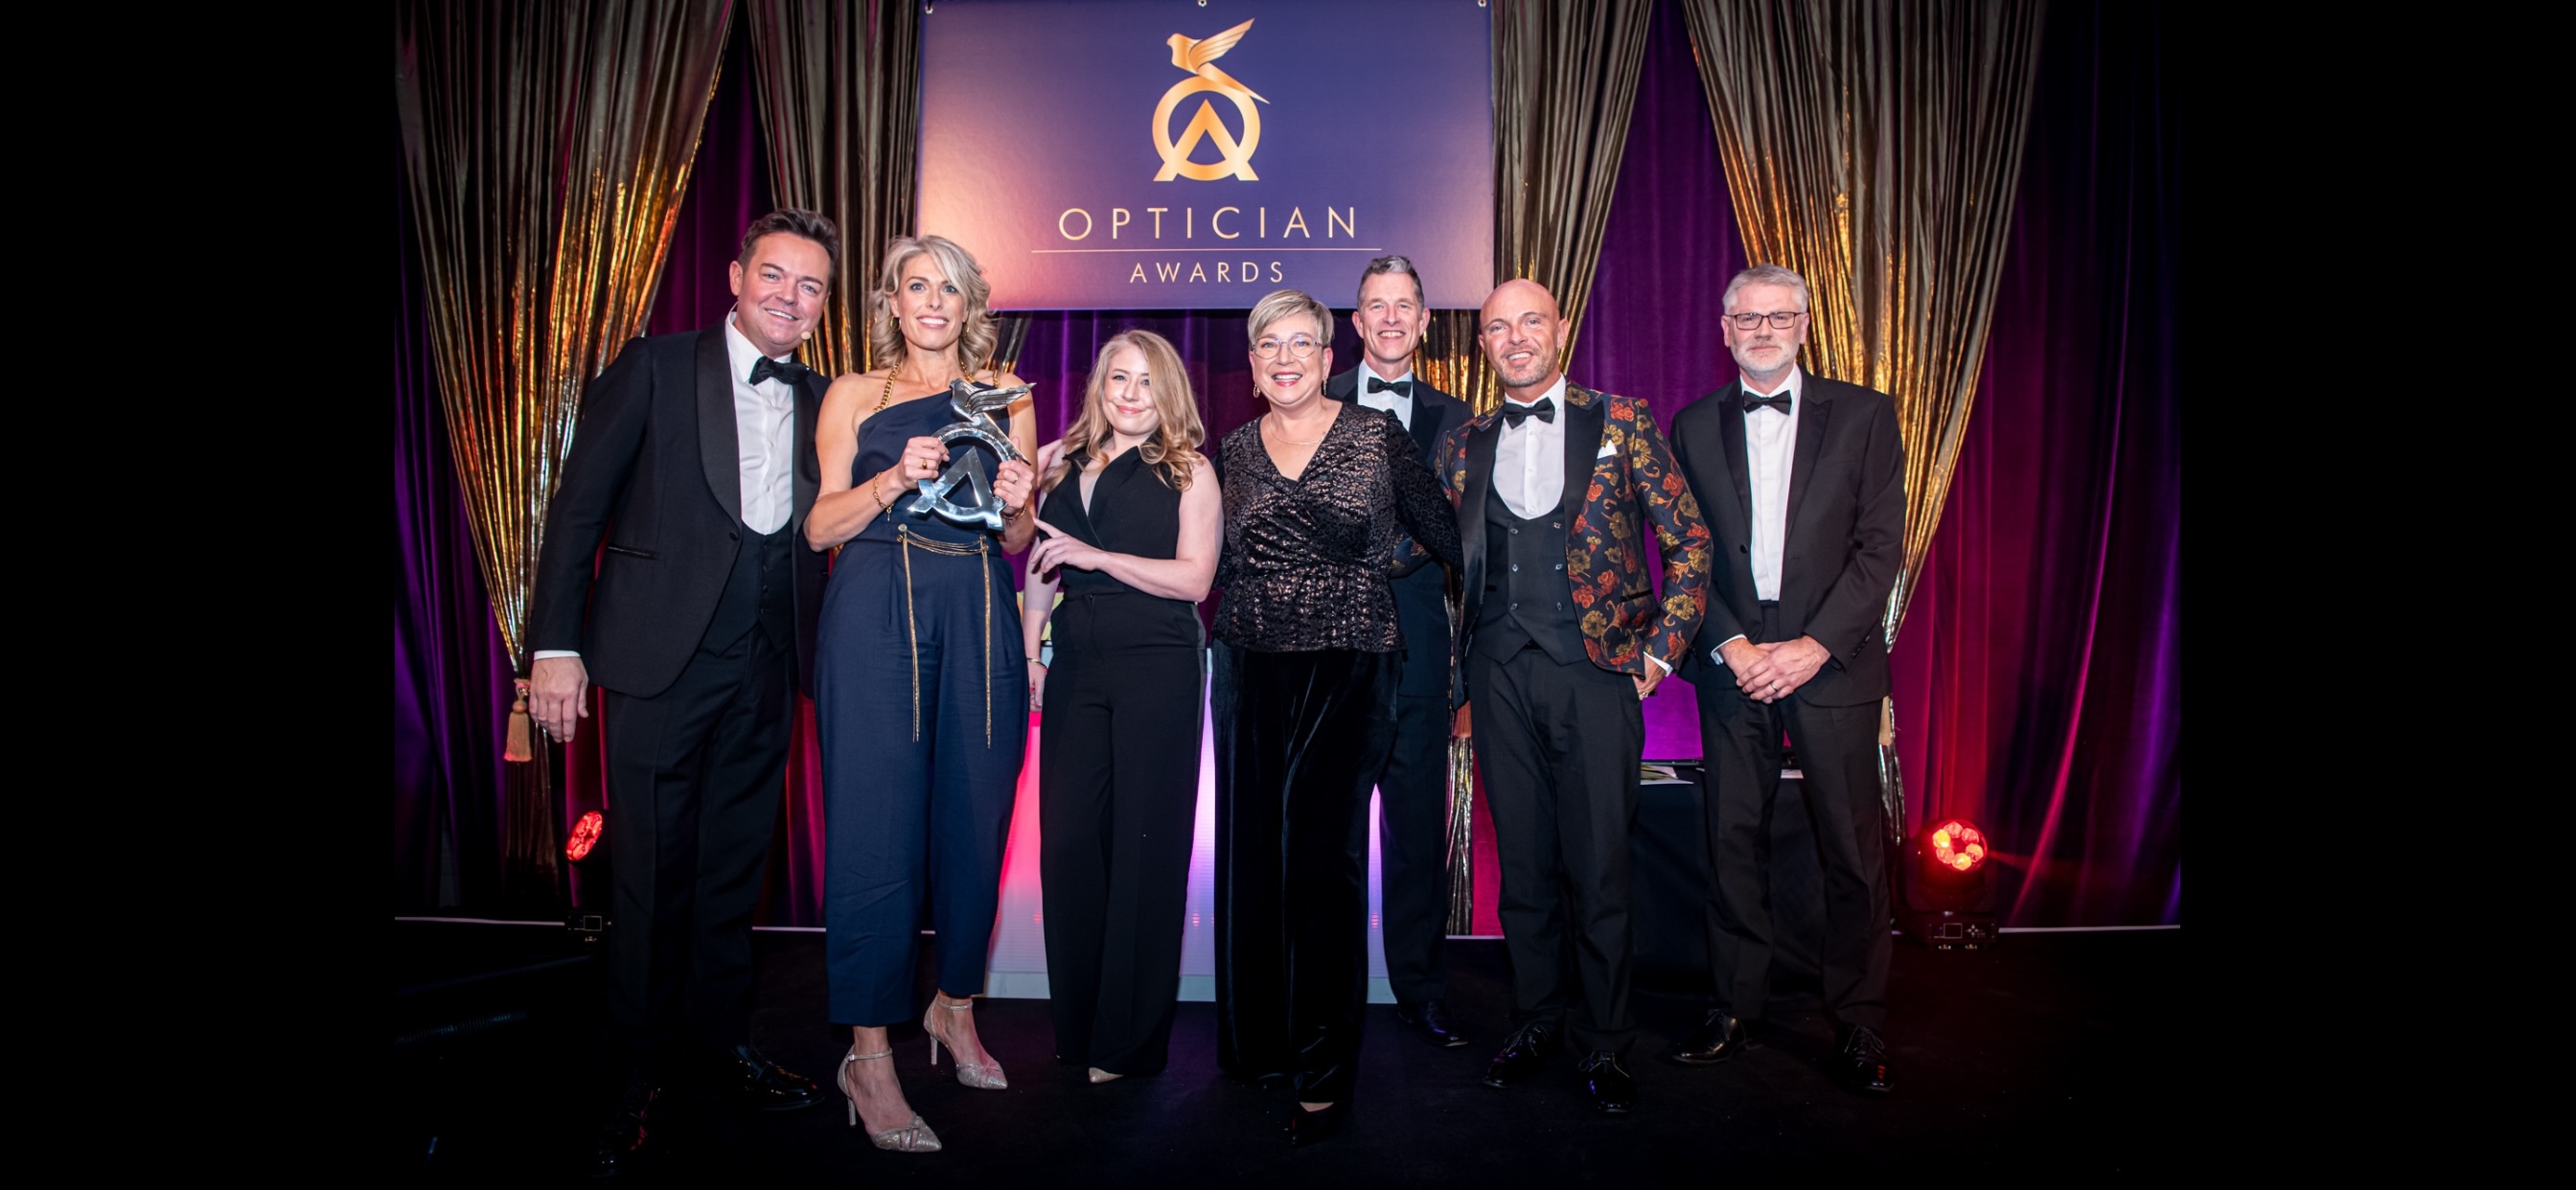 Optician Awards 2021 - Park Vision receives "Independent Practice Award"